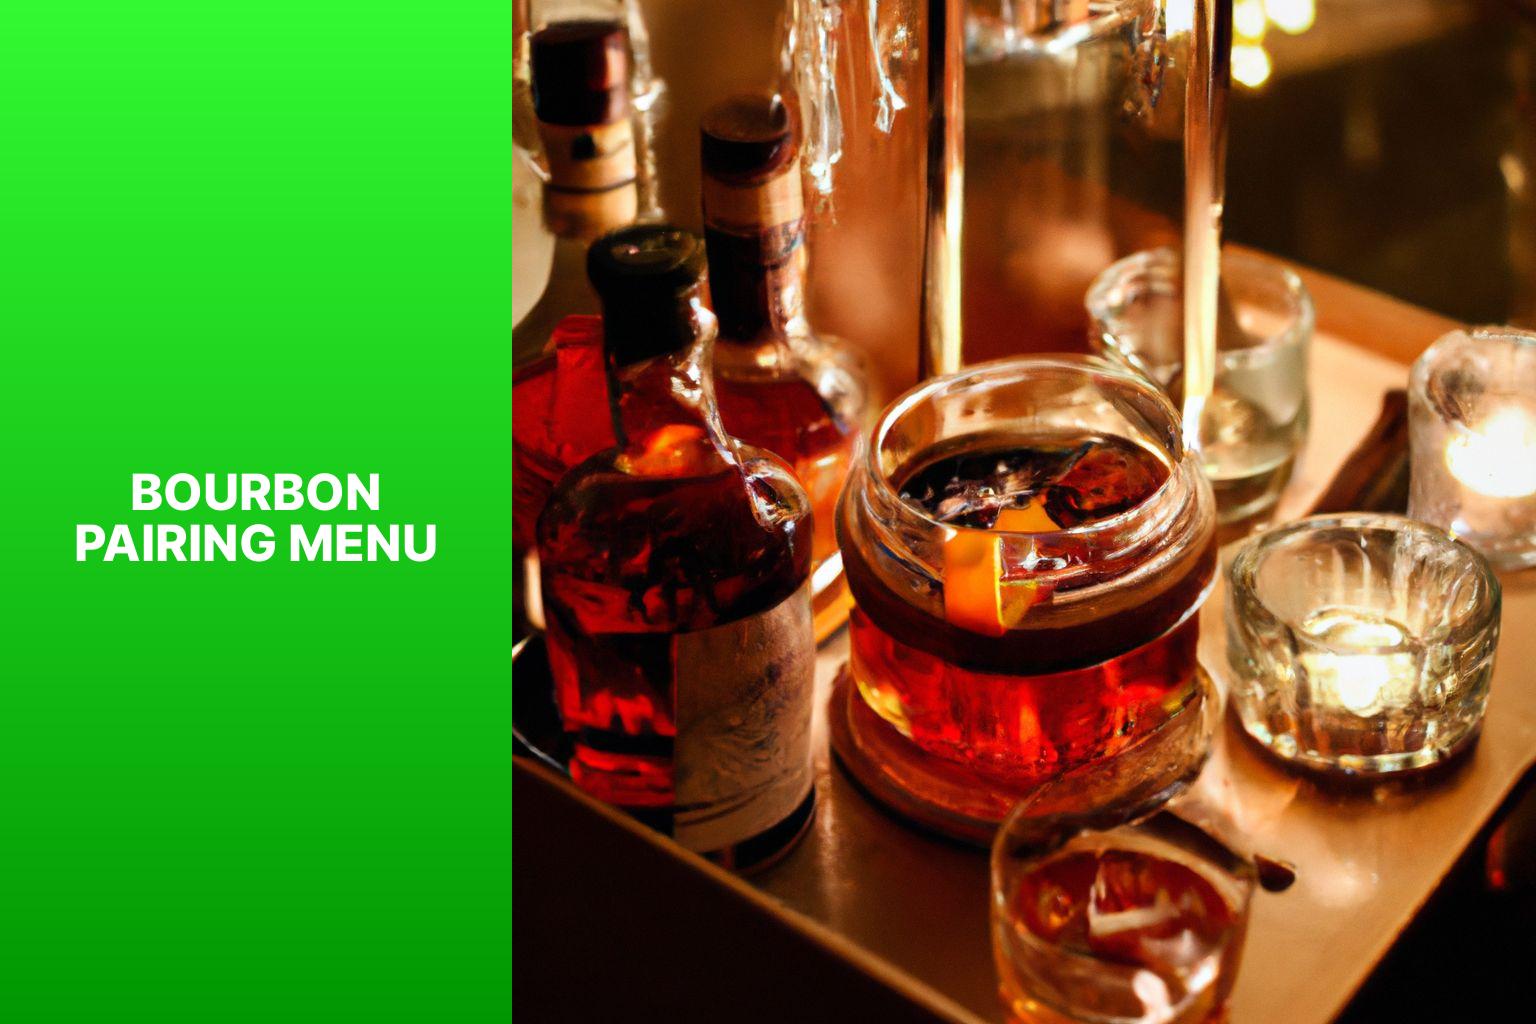 Bourbon pairing menu